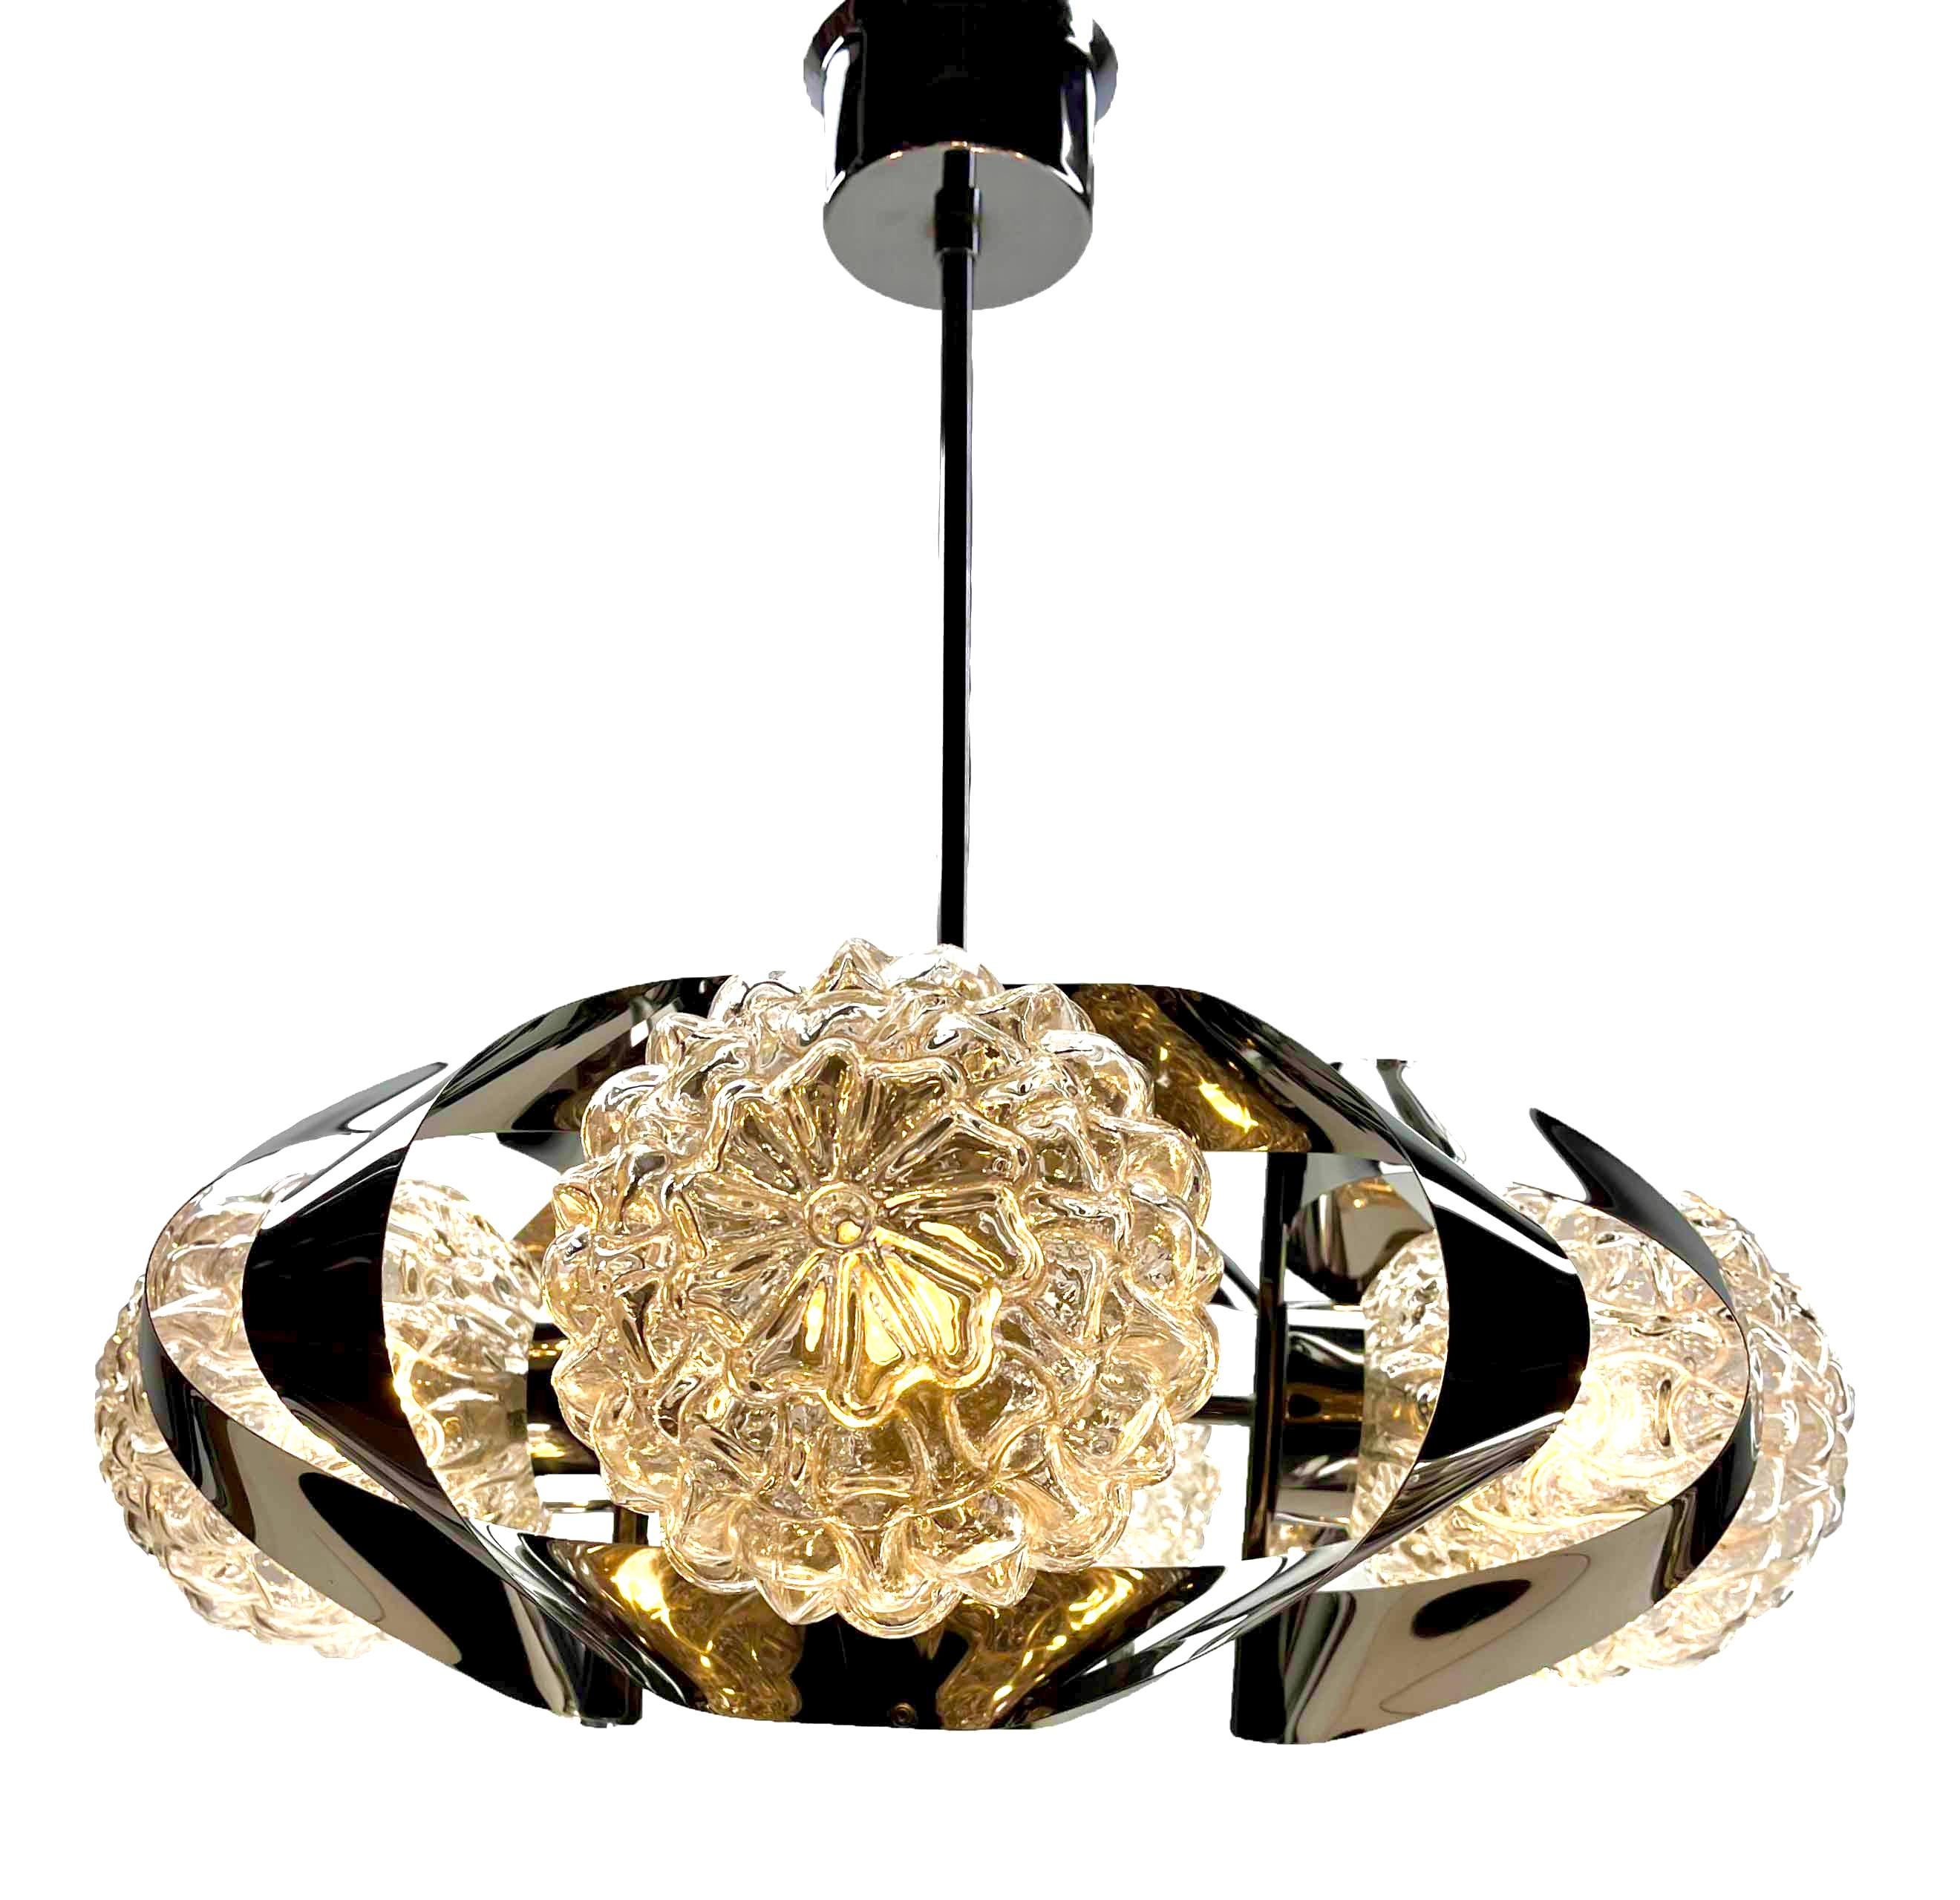  Swirl Ball Pendant Stem Lamp with 4 Globular Lights Massive Belgium 1960s For Sale 1